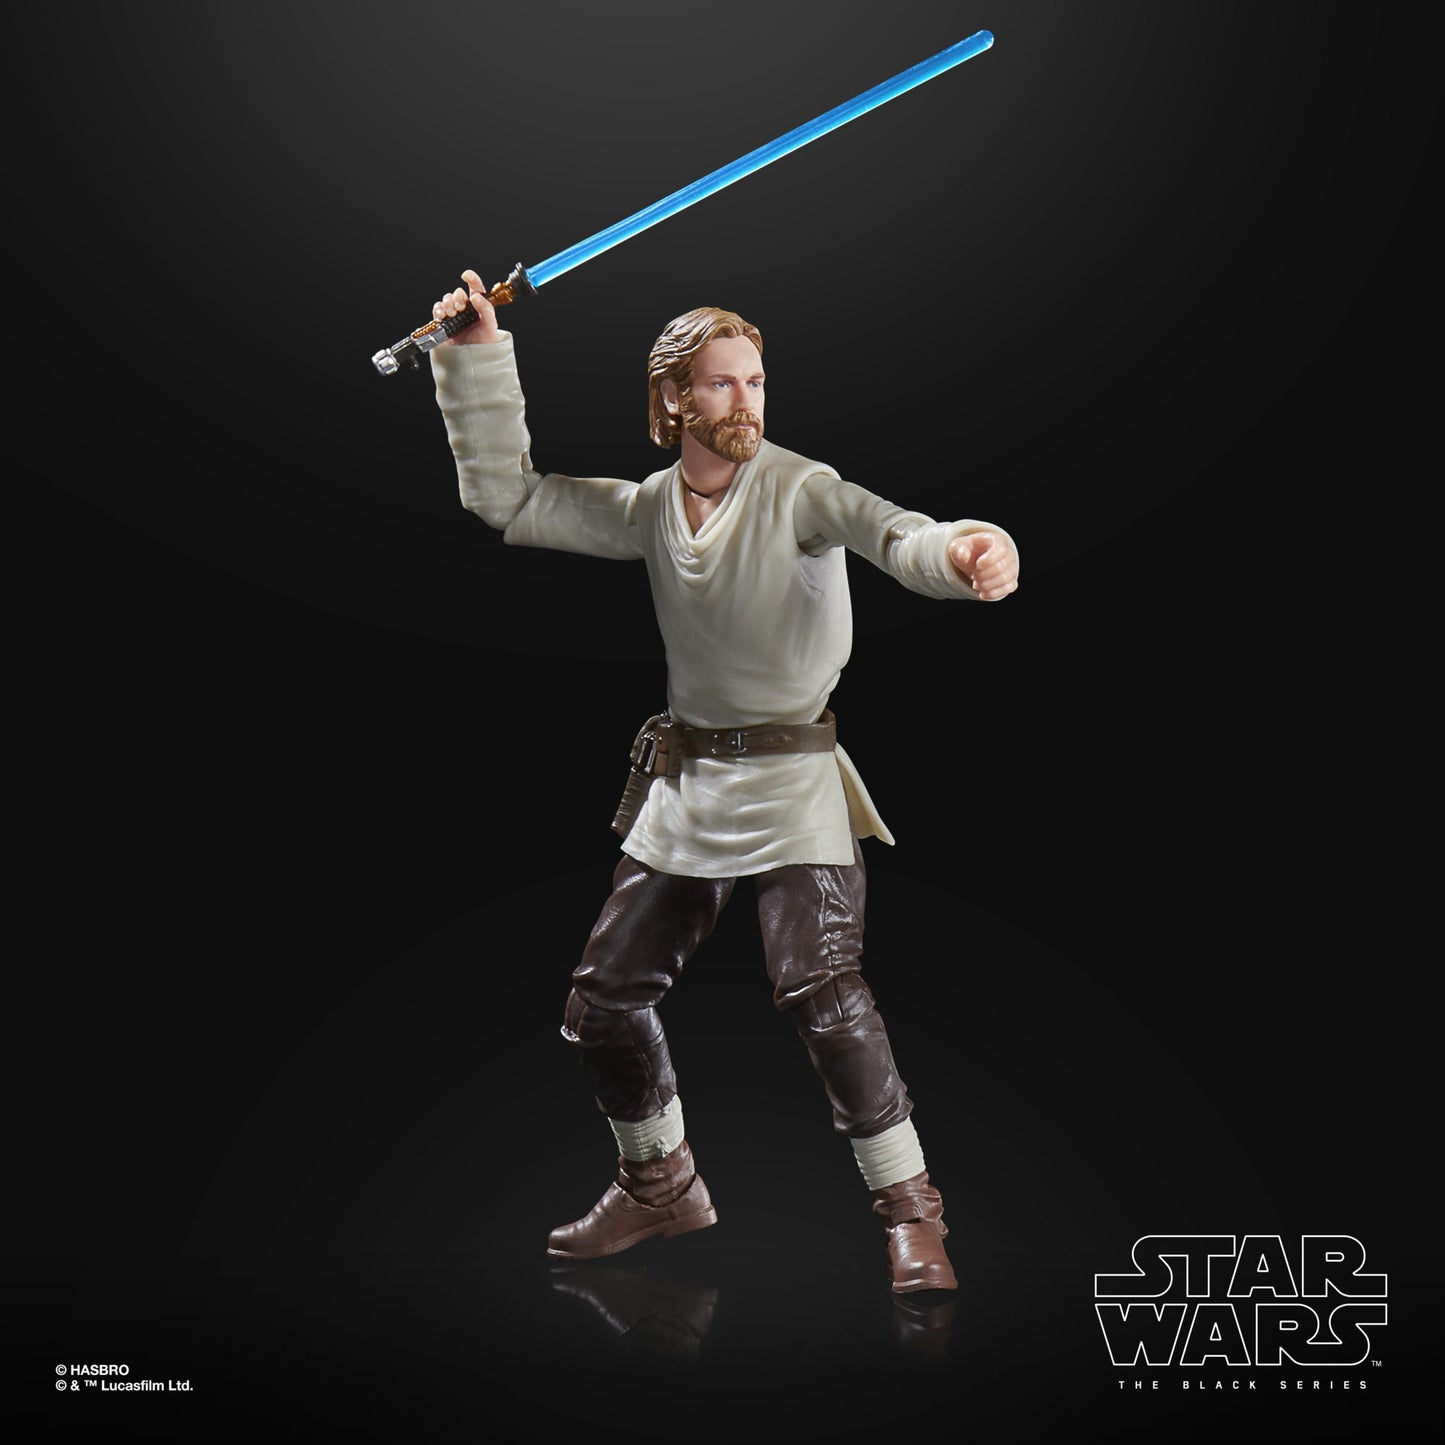 Obi-Wan Kenobi Wandering Jedi (Obi-Wan Kenobi) - Star Wars: The Black Series 6" Action Figure